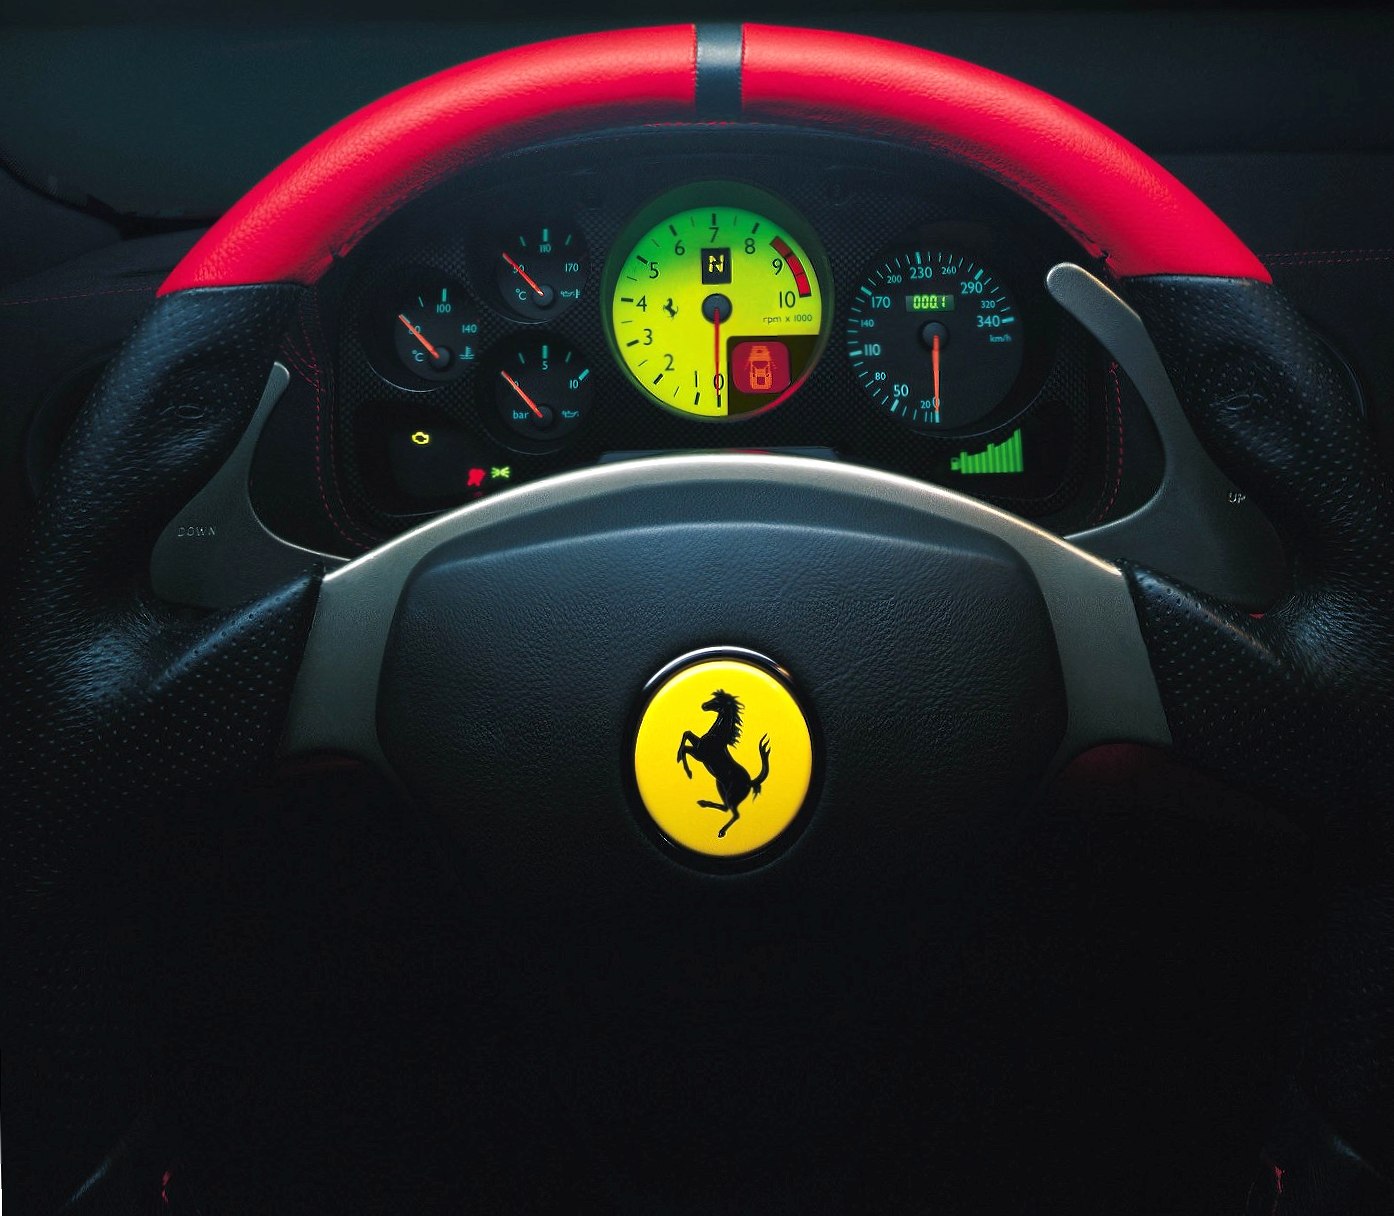 Ferrari HD at 1600 x 1200 size wallpapers HD quality